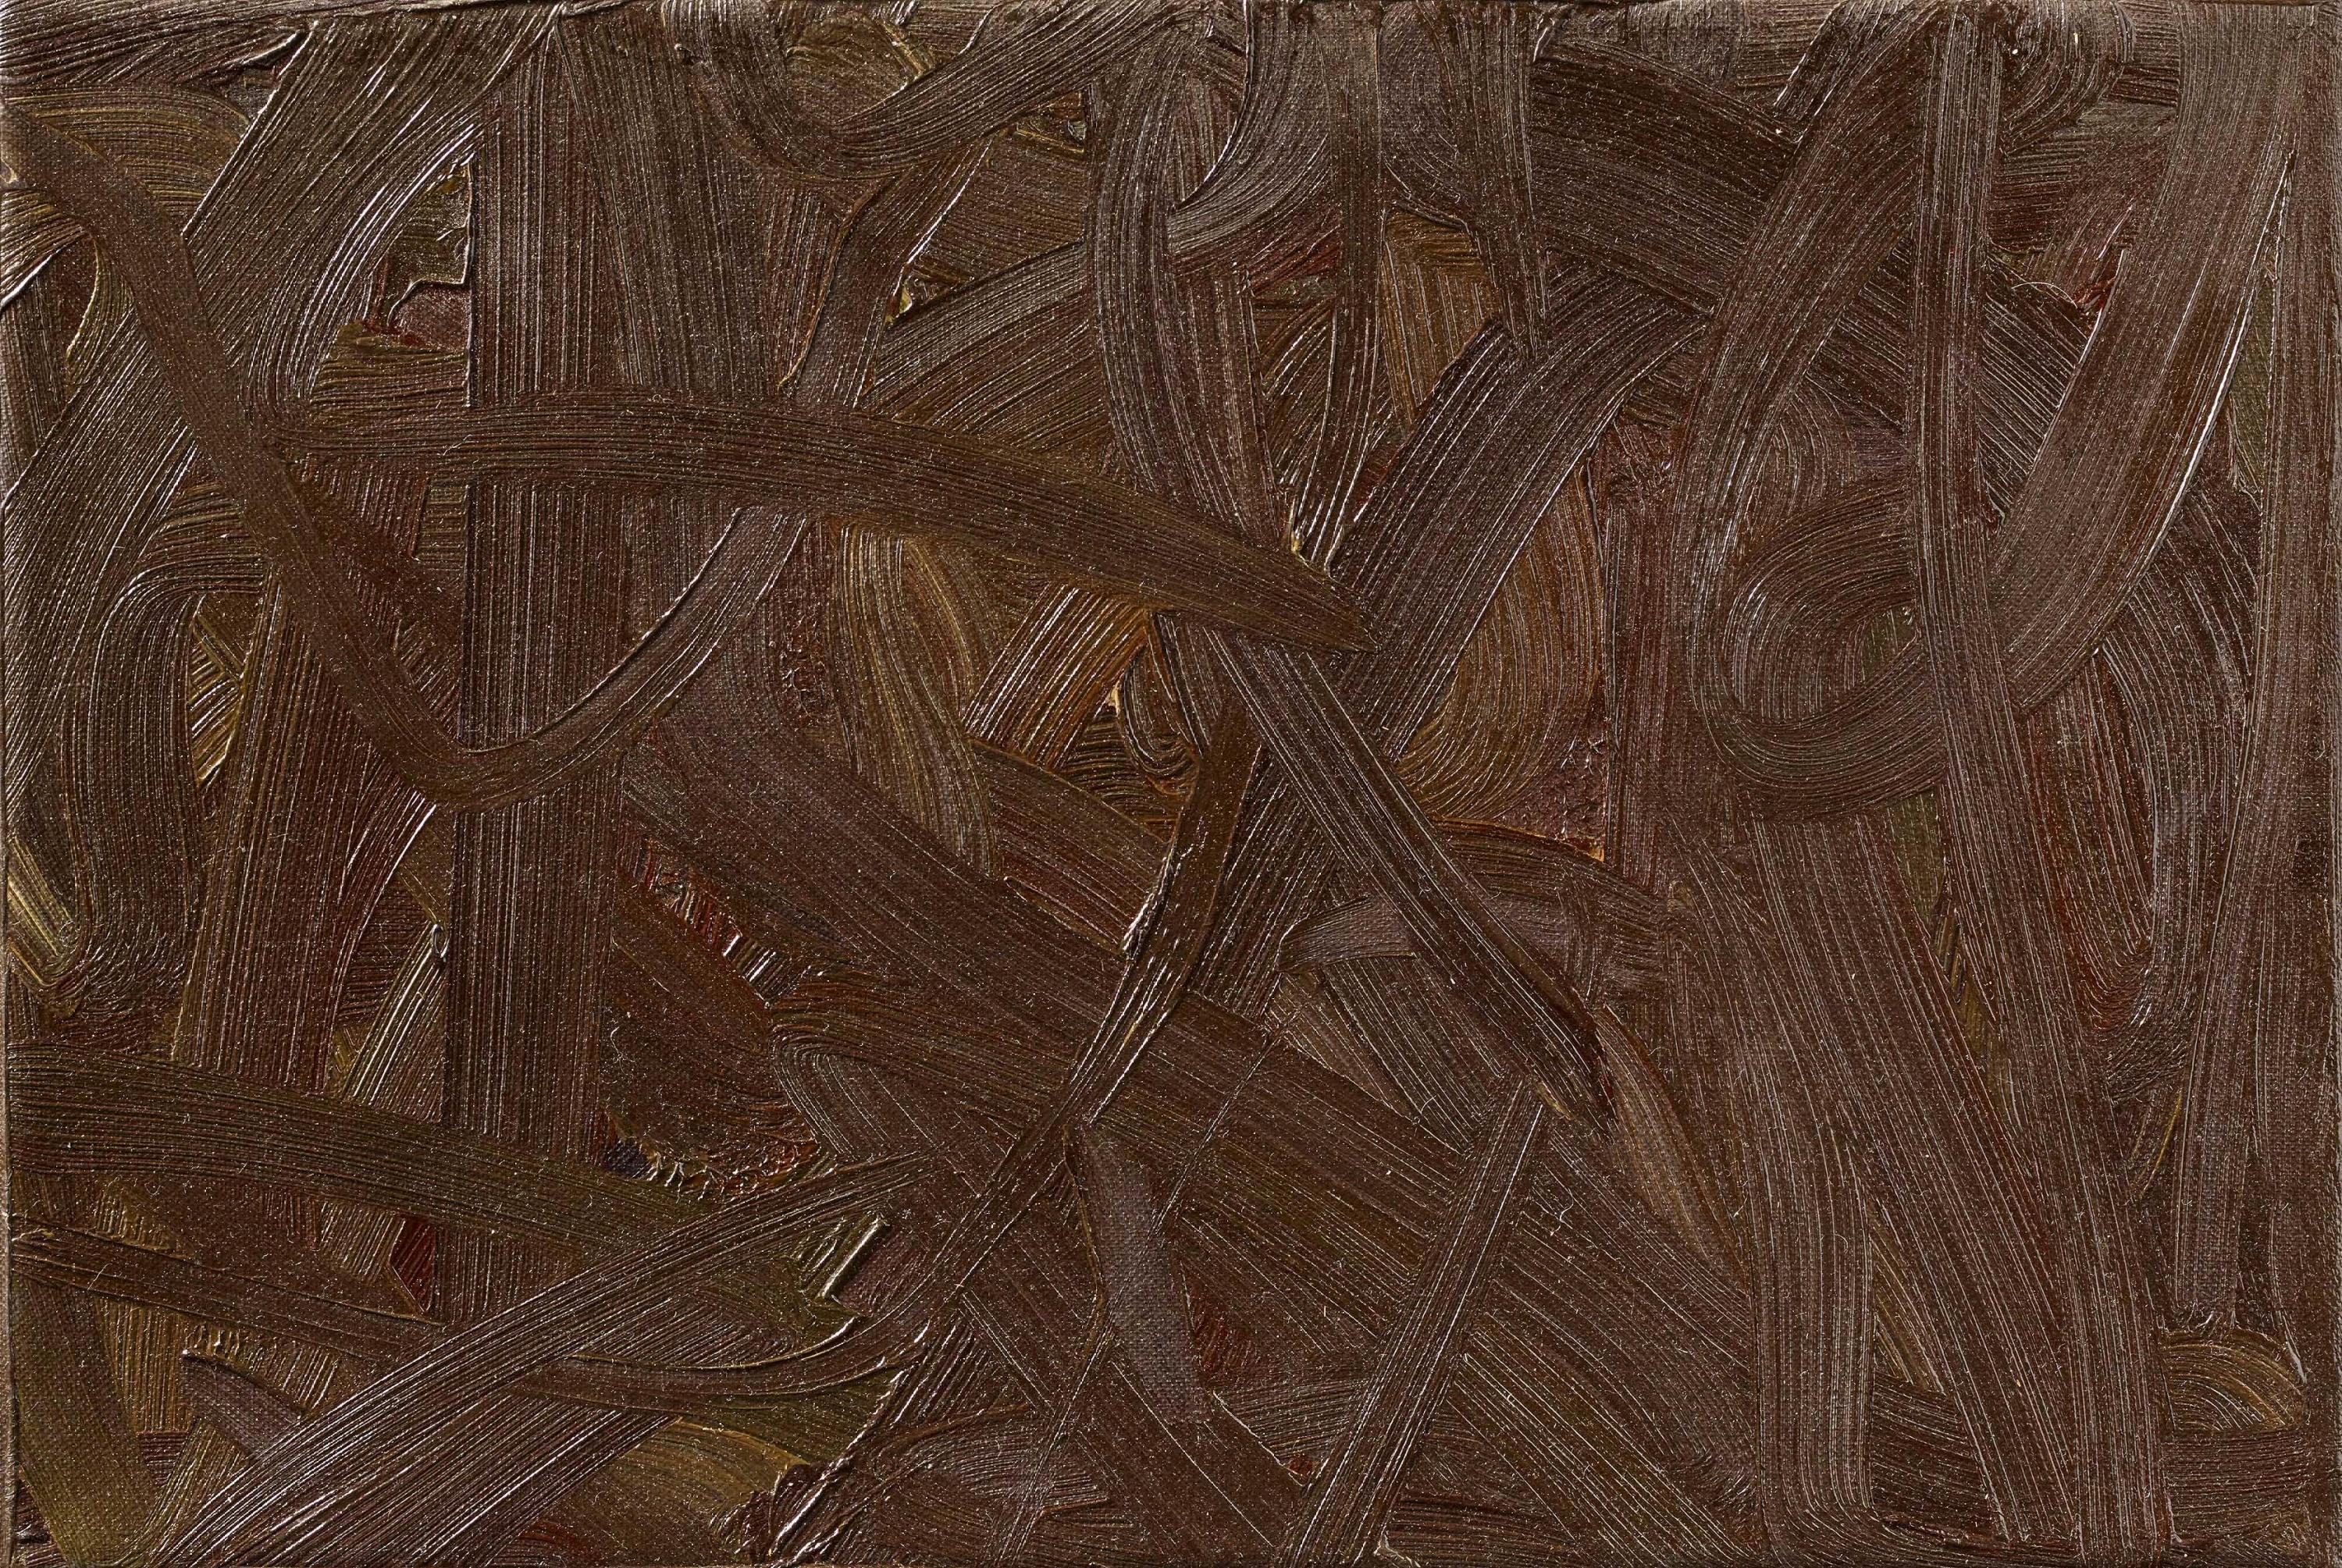 Gerhard Richter - Vermalung braun, 73611-1, Van Ham Kunstauktionen